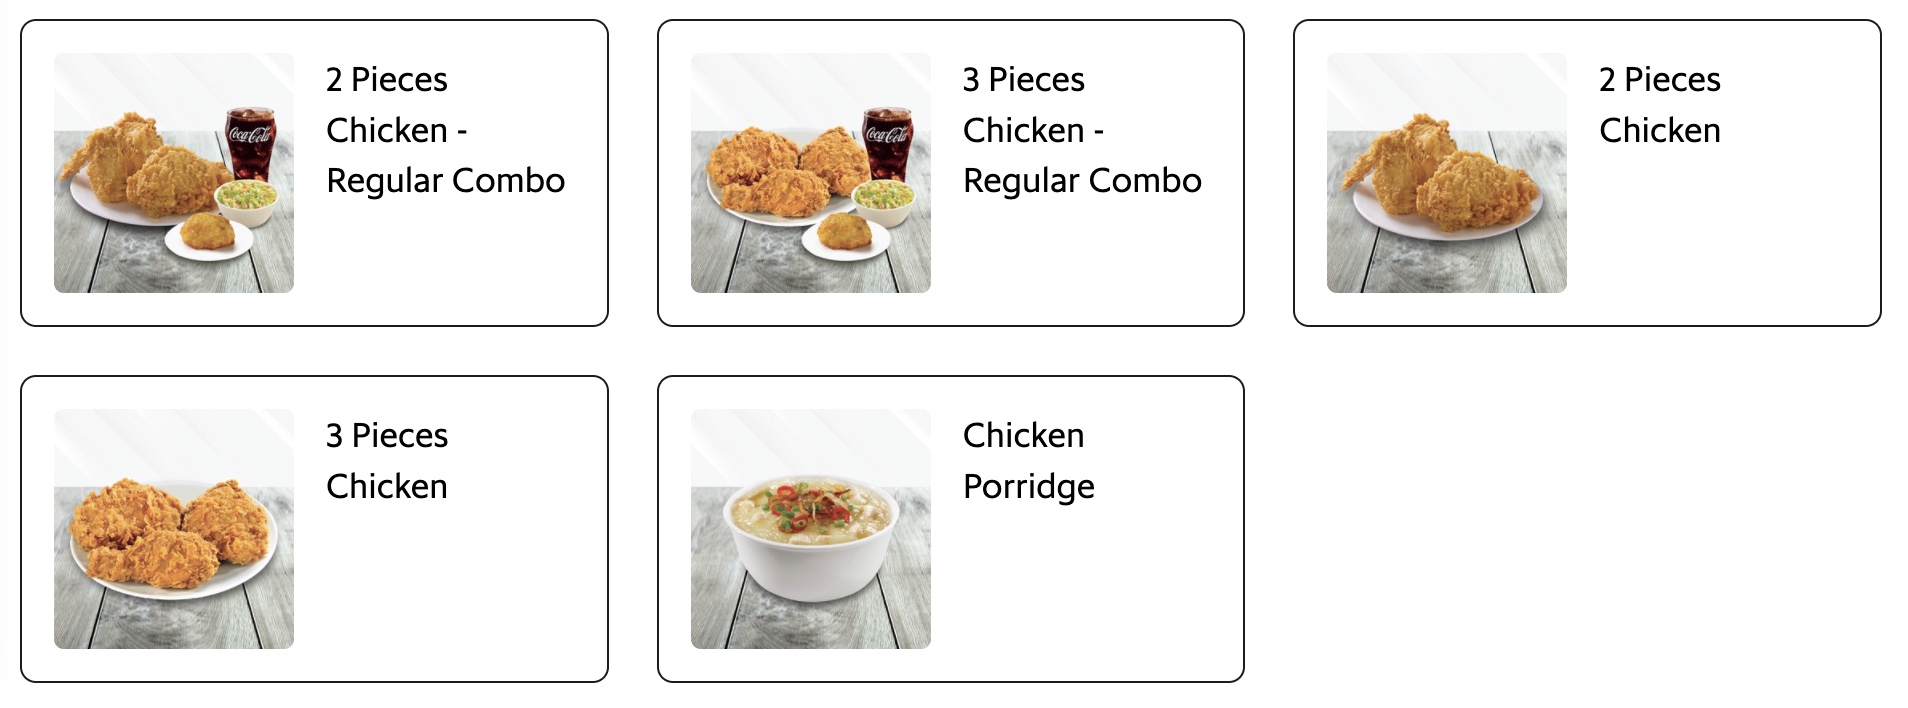 Chicken Meals Menu Texas Chicken Malaysia